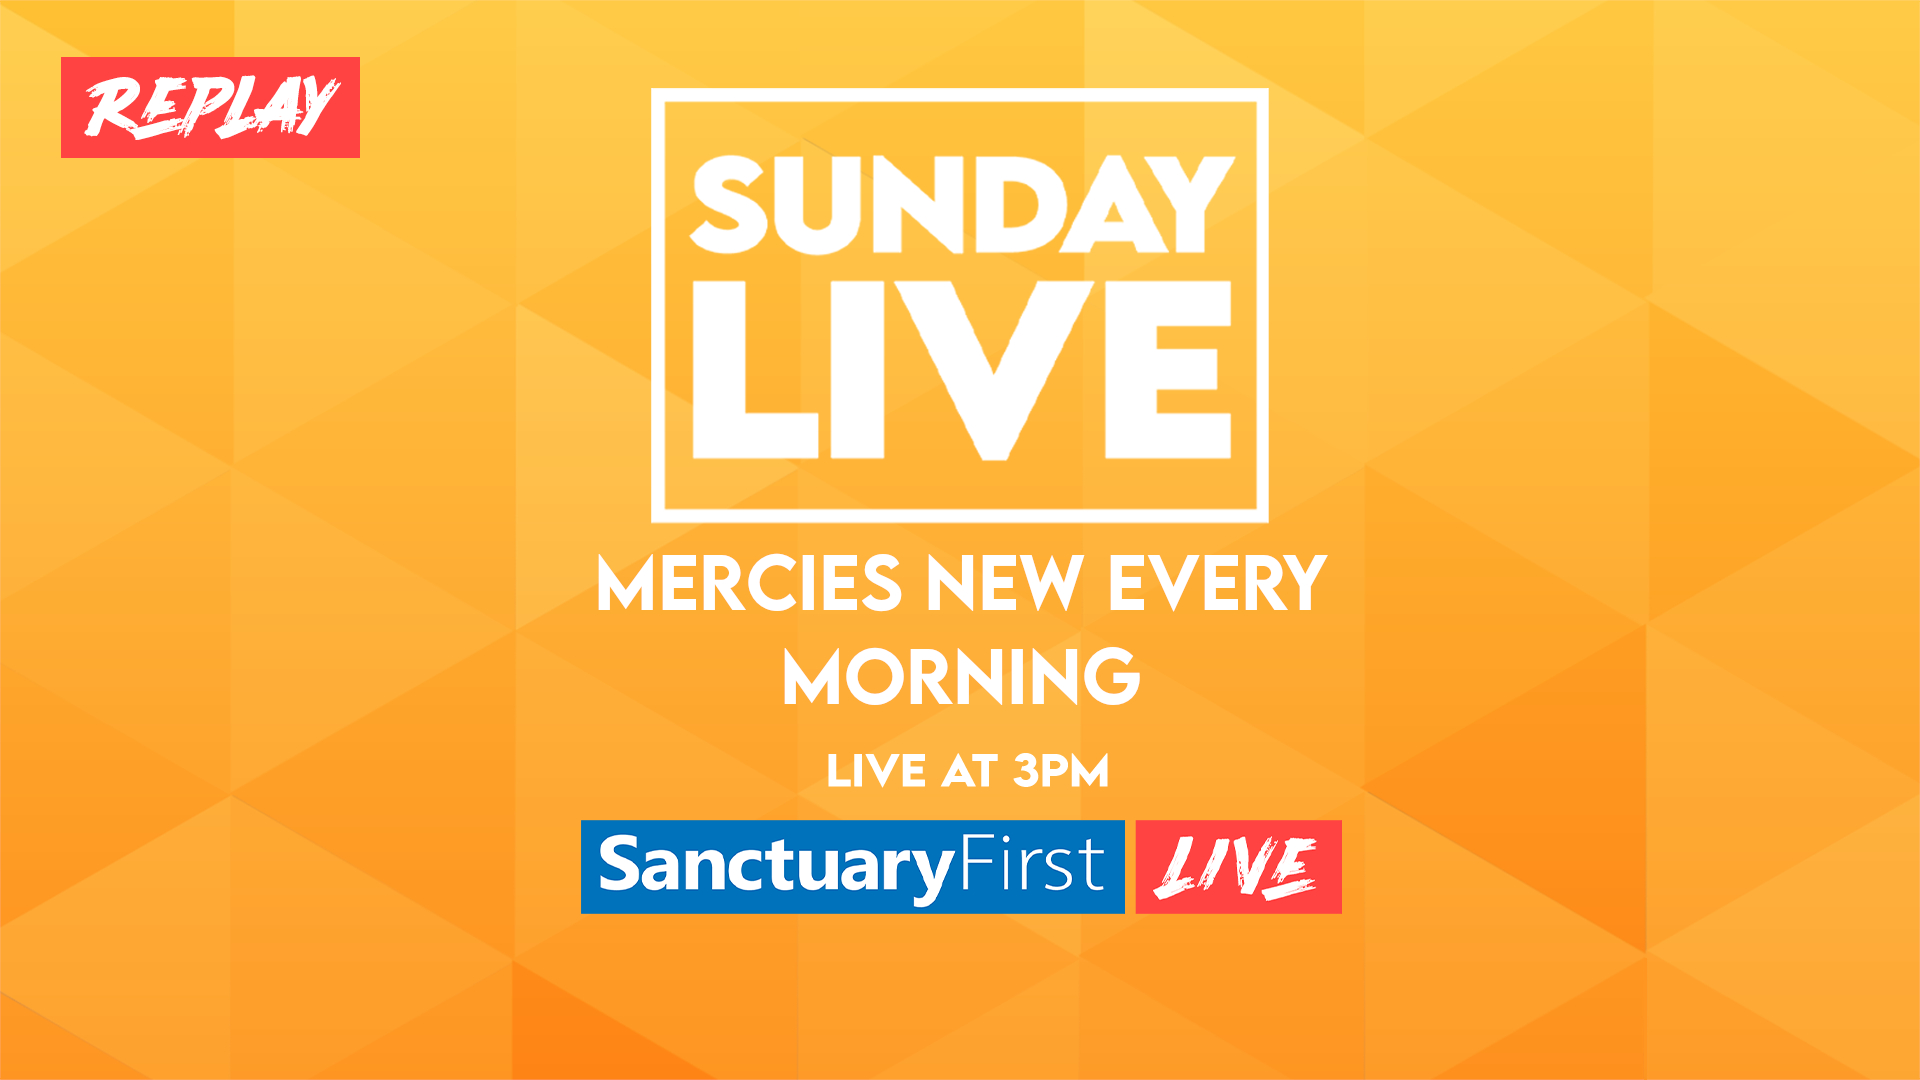 Sunday Live - Mercies new every morning